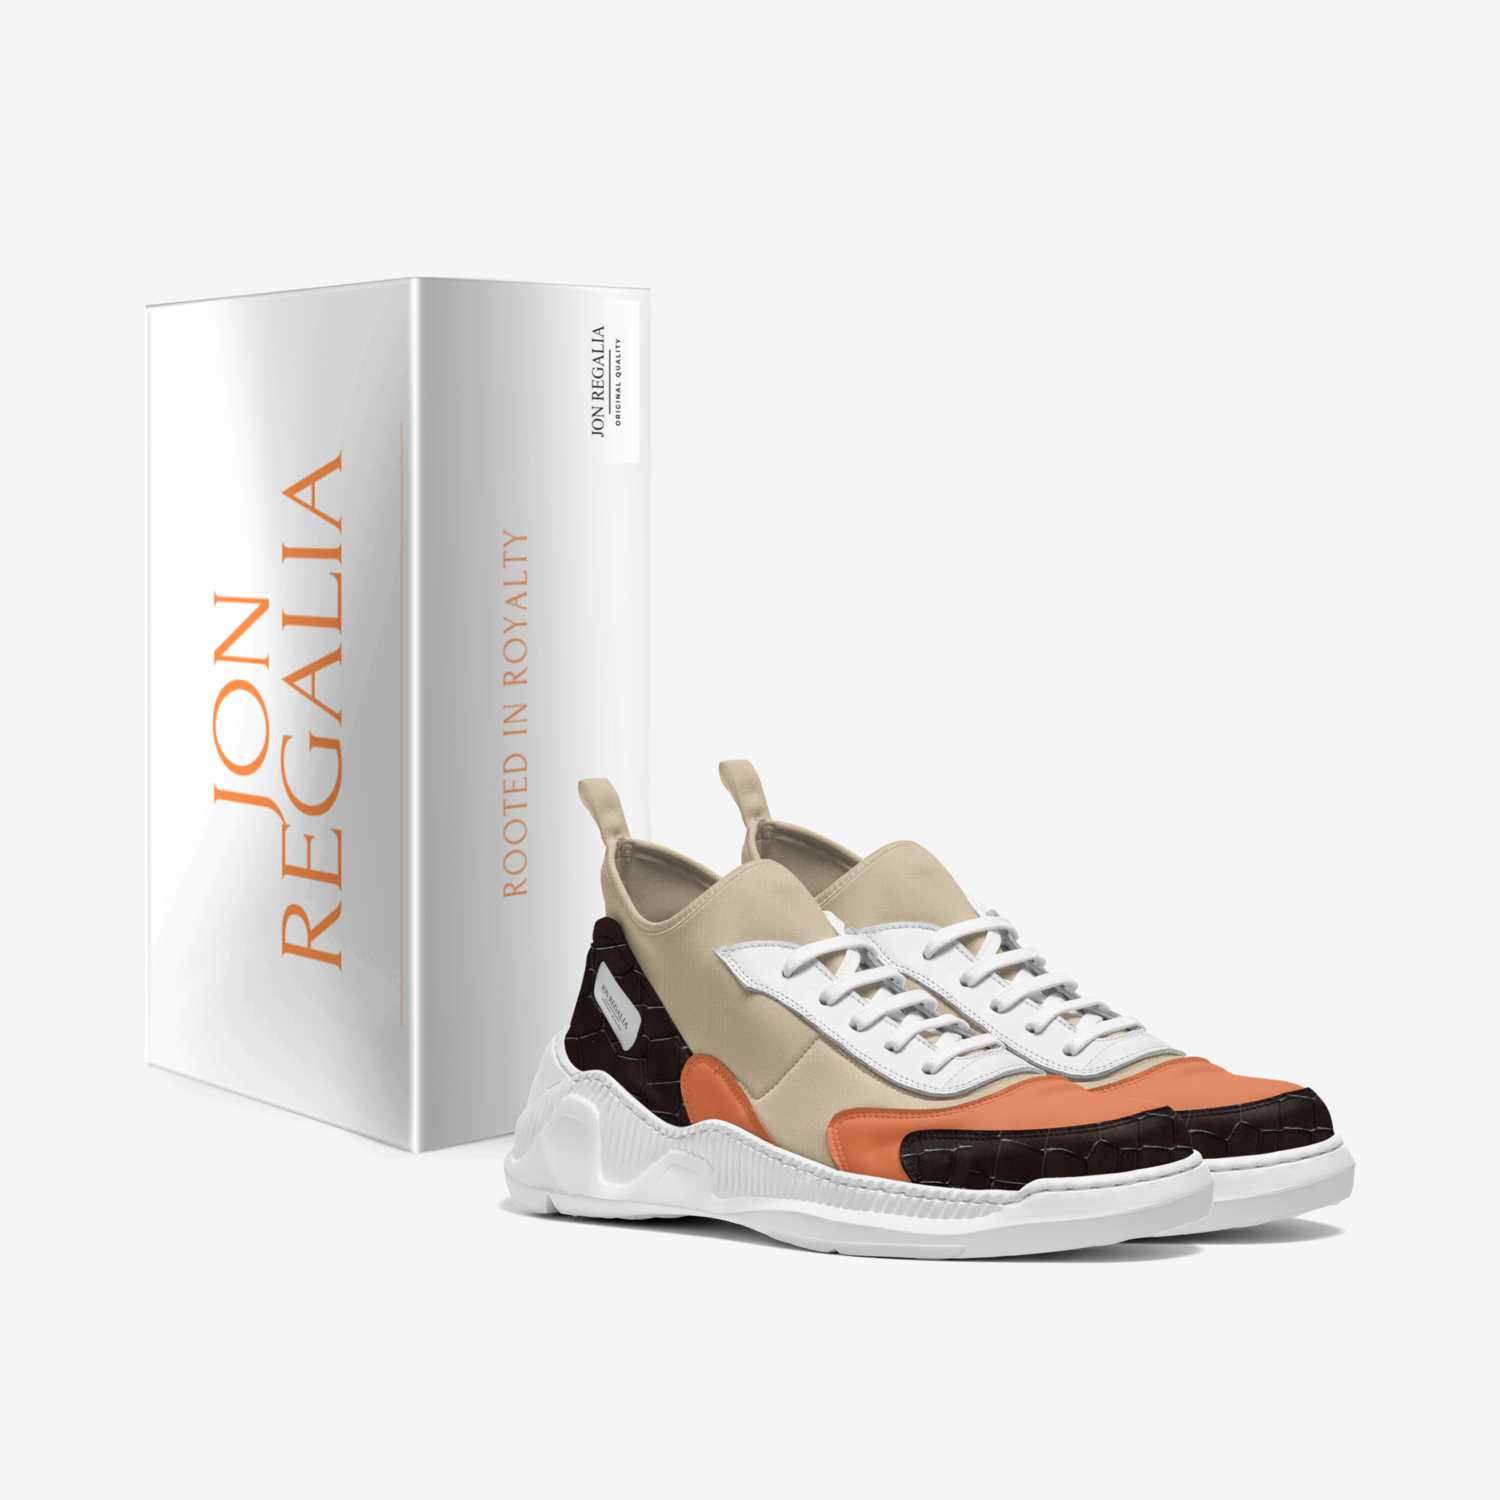 jon regalia custom made in Italy shoes by Eric Haylock | Box view